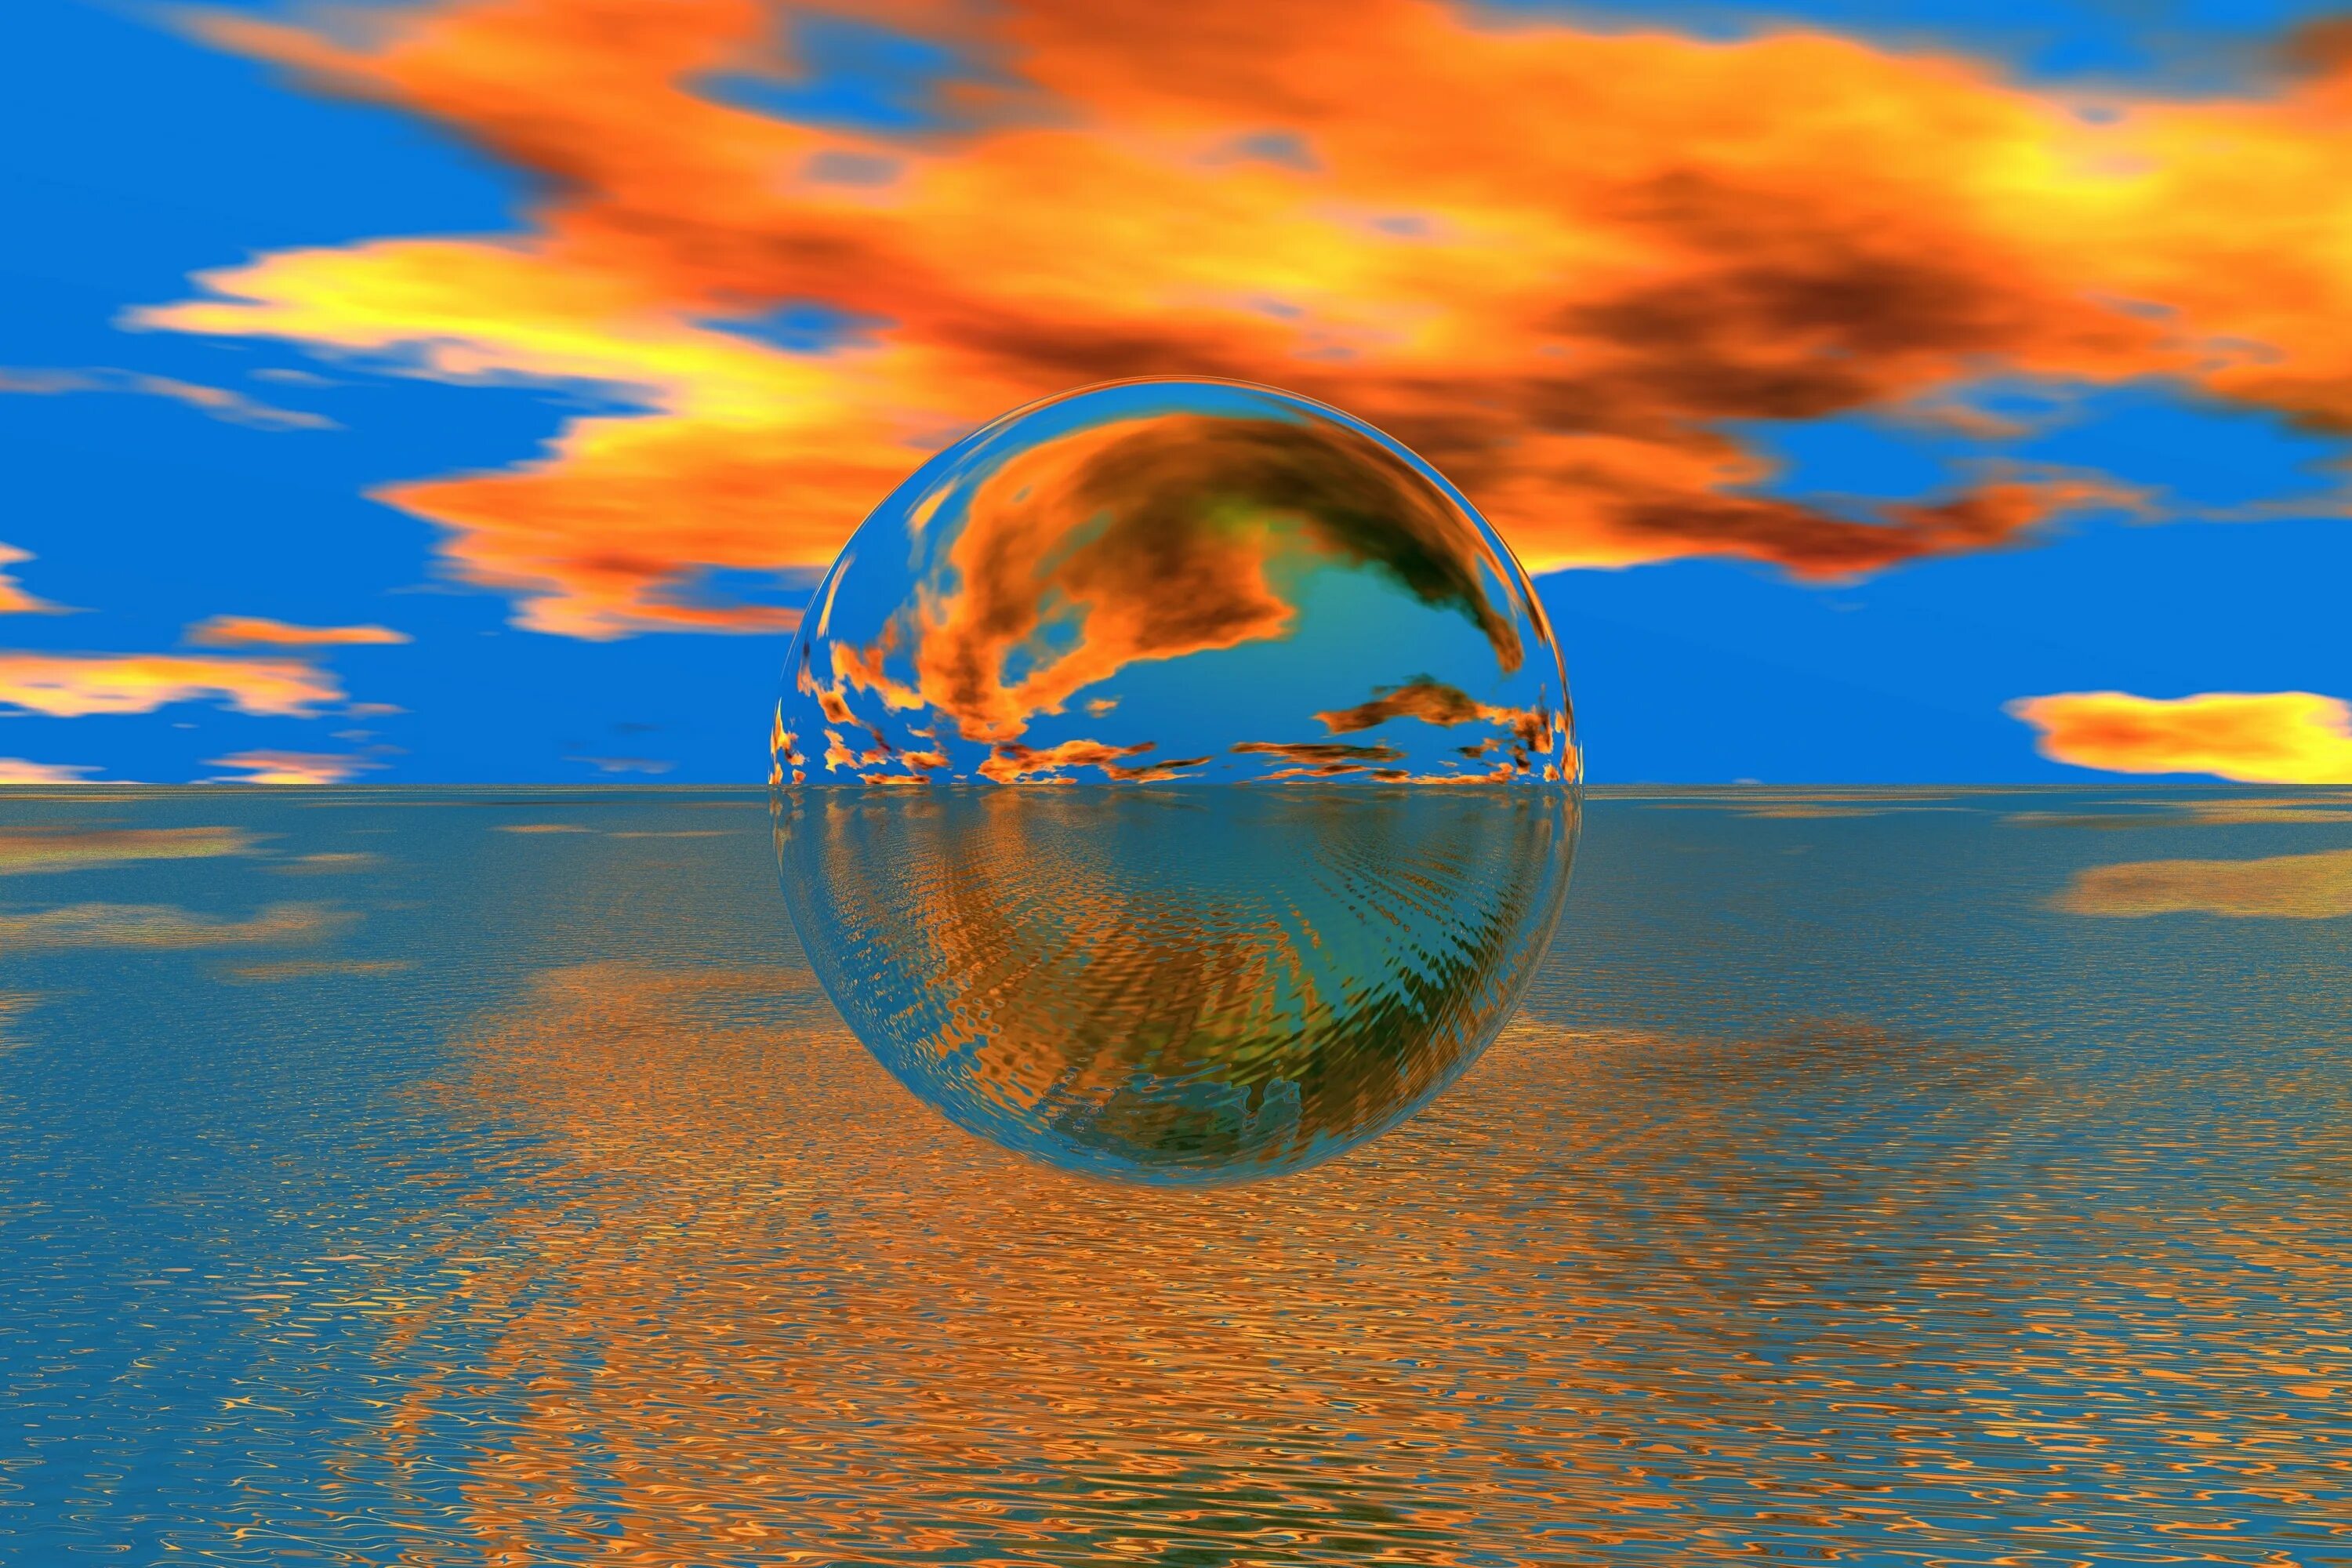 Отражение в воде. Планета вода. Море отражение. Отражение планеты в воде.